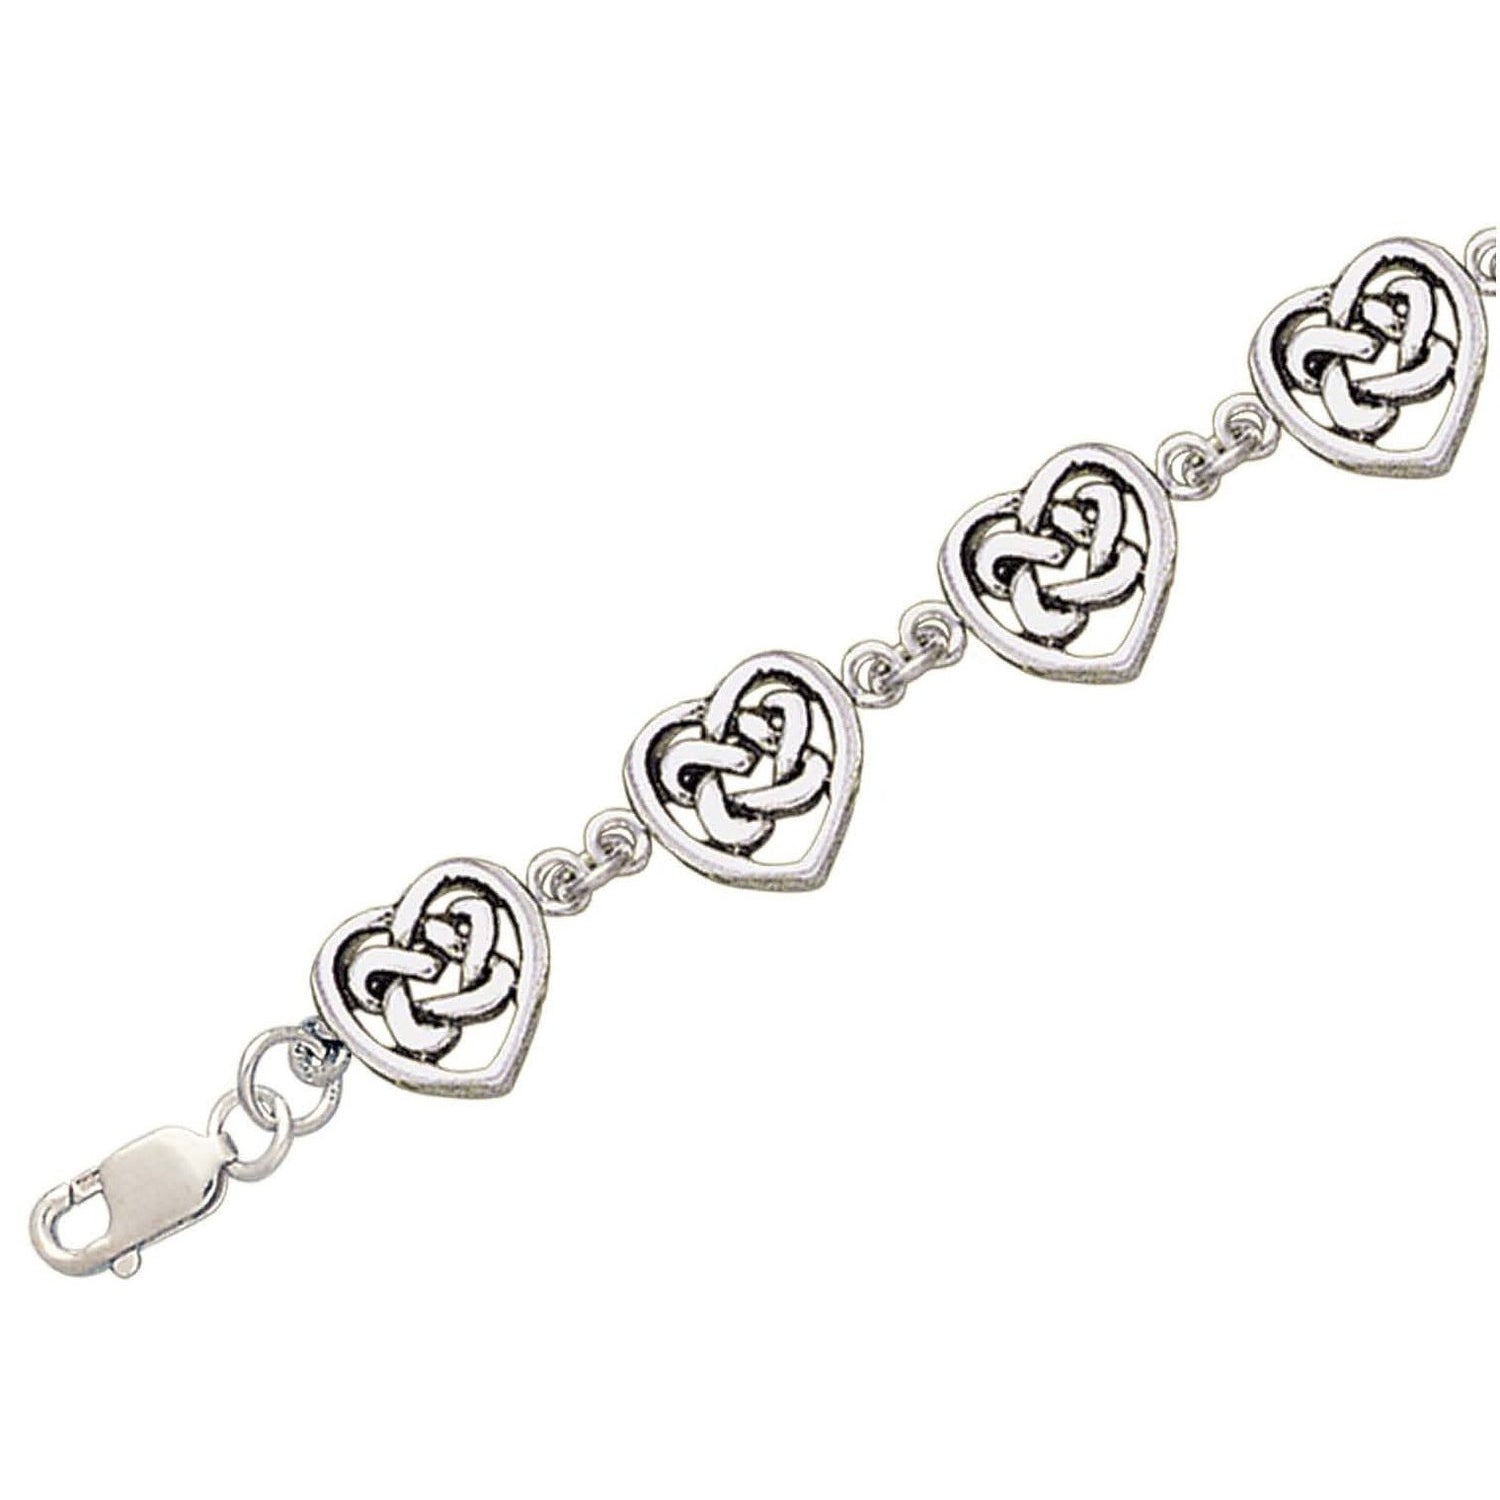 Celtic Trinity Knot Heart Link Bracelet, 7.5" Nickel-Free Sterling Silver - Silver Insanity